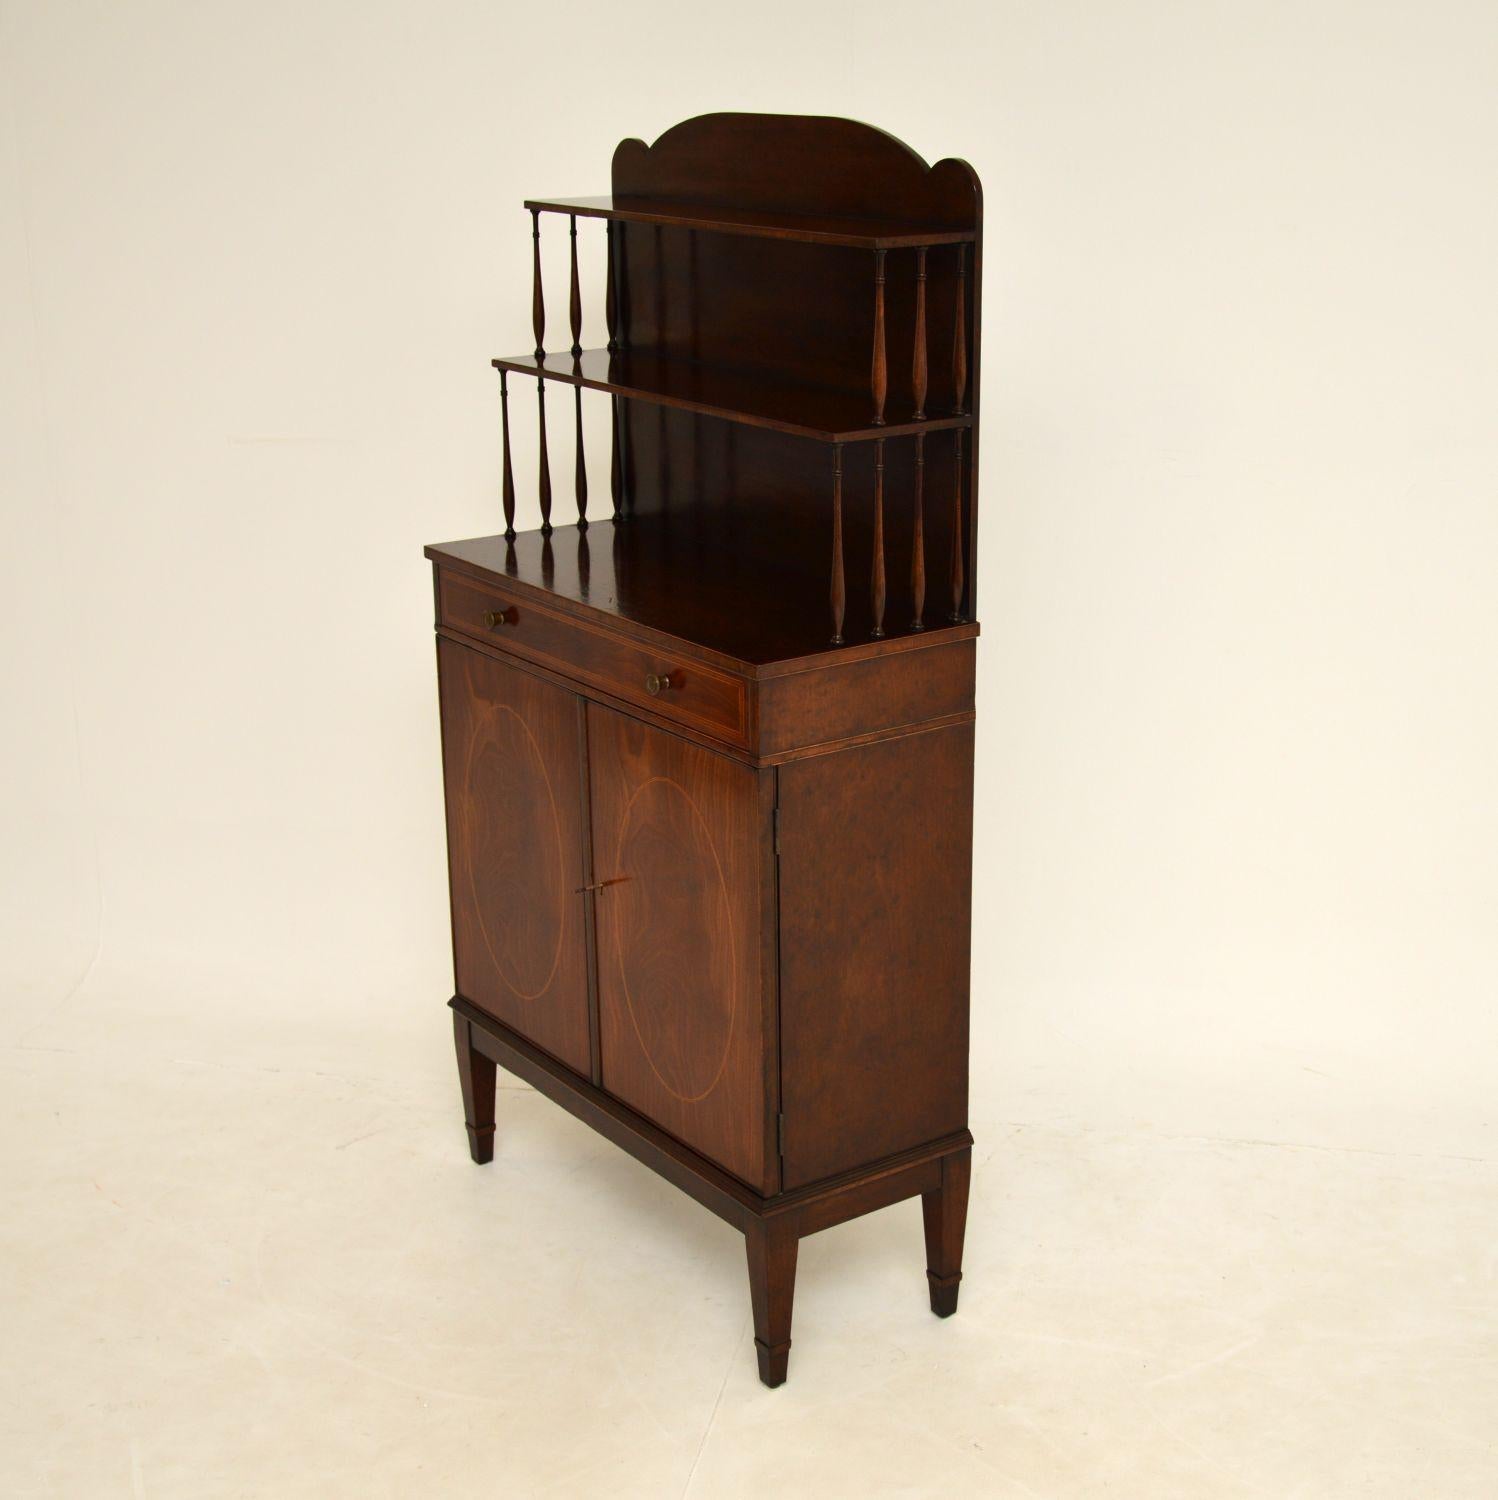 English Antique Sheraton Style Inlaid Bookcase / Cabinet